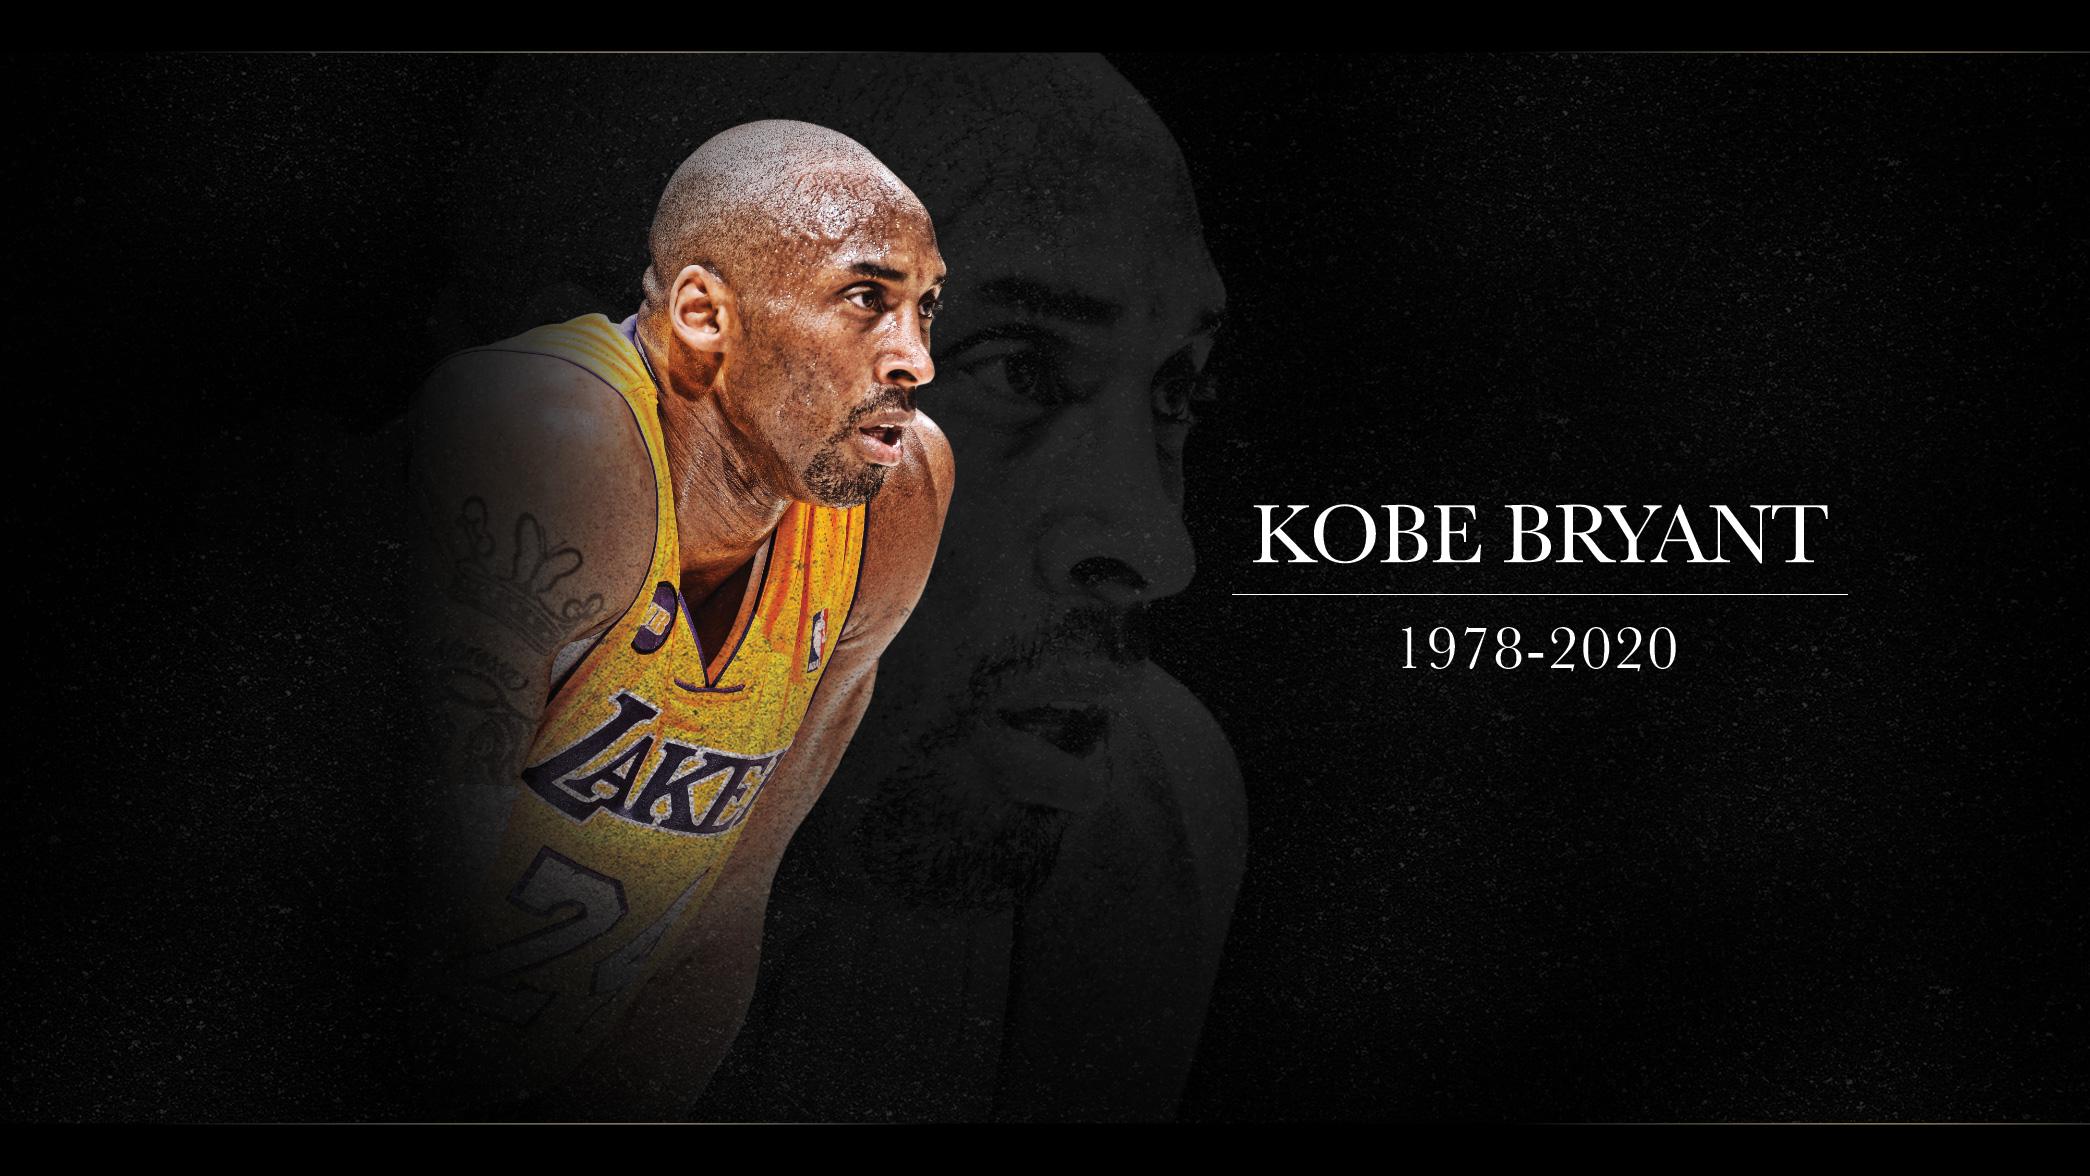 Los Angeles Lakers legend Kobe Bryant dies at 41 in helicopter